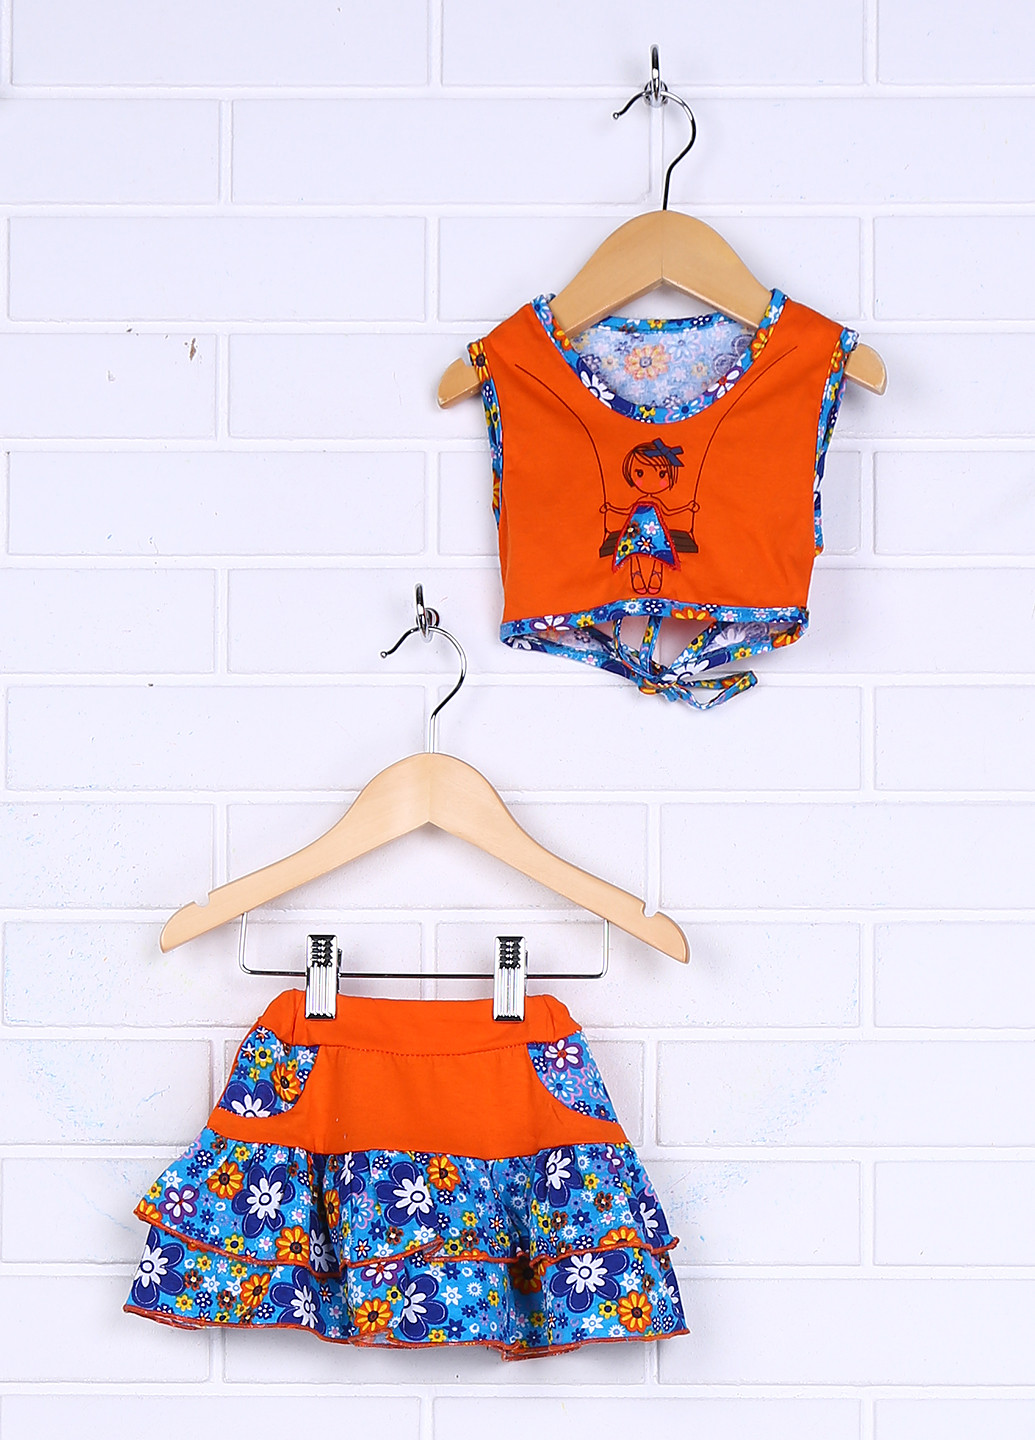 Оранжевый летний костюм (топ, юбка) юбочный Baby Art